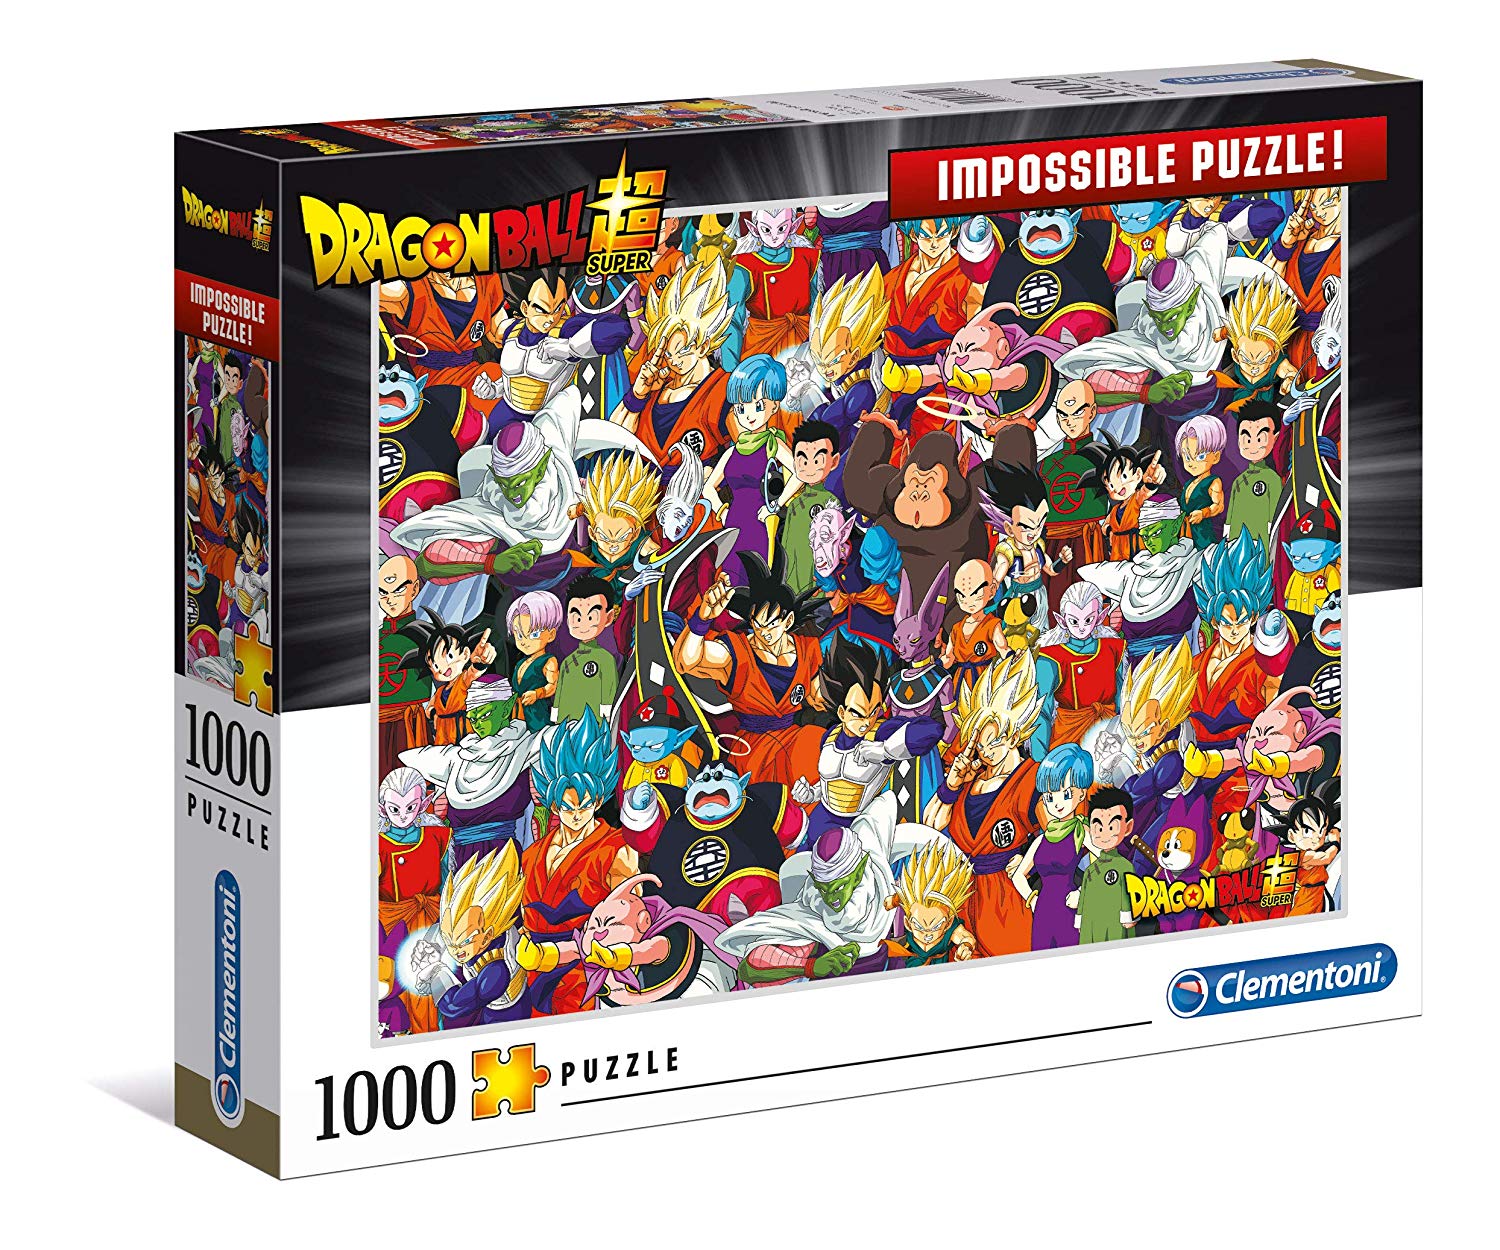 Clementoni Impossible Puzzle Dragon Ball Pieces Multicoloured